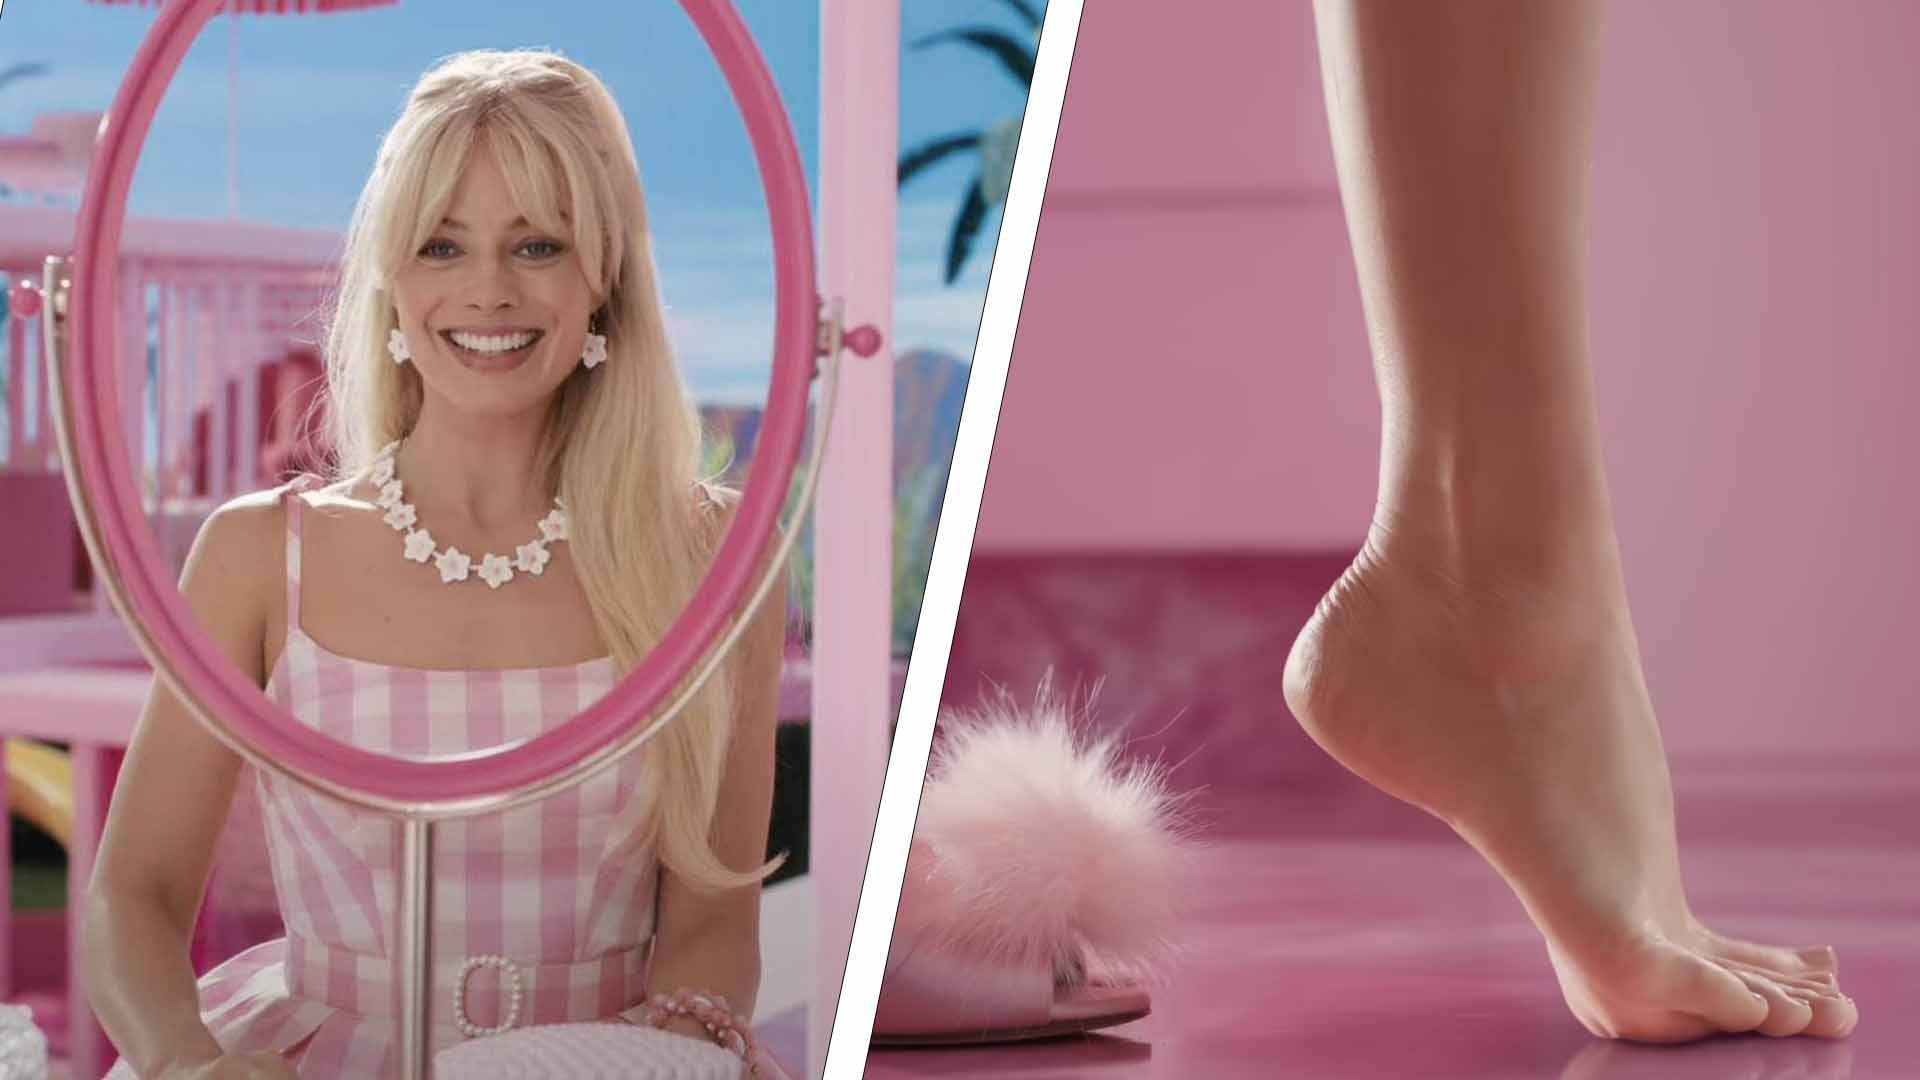 Barbie-Foot Heels Are a Popular Celebrity Shoe Trend